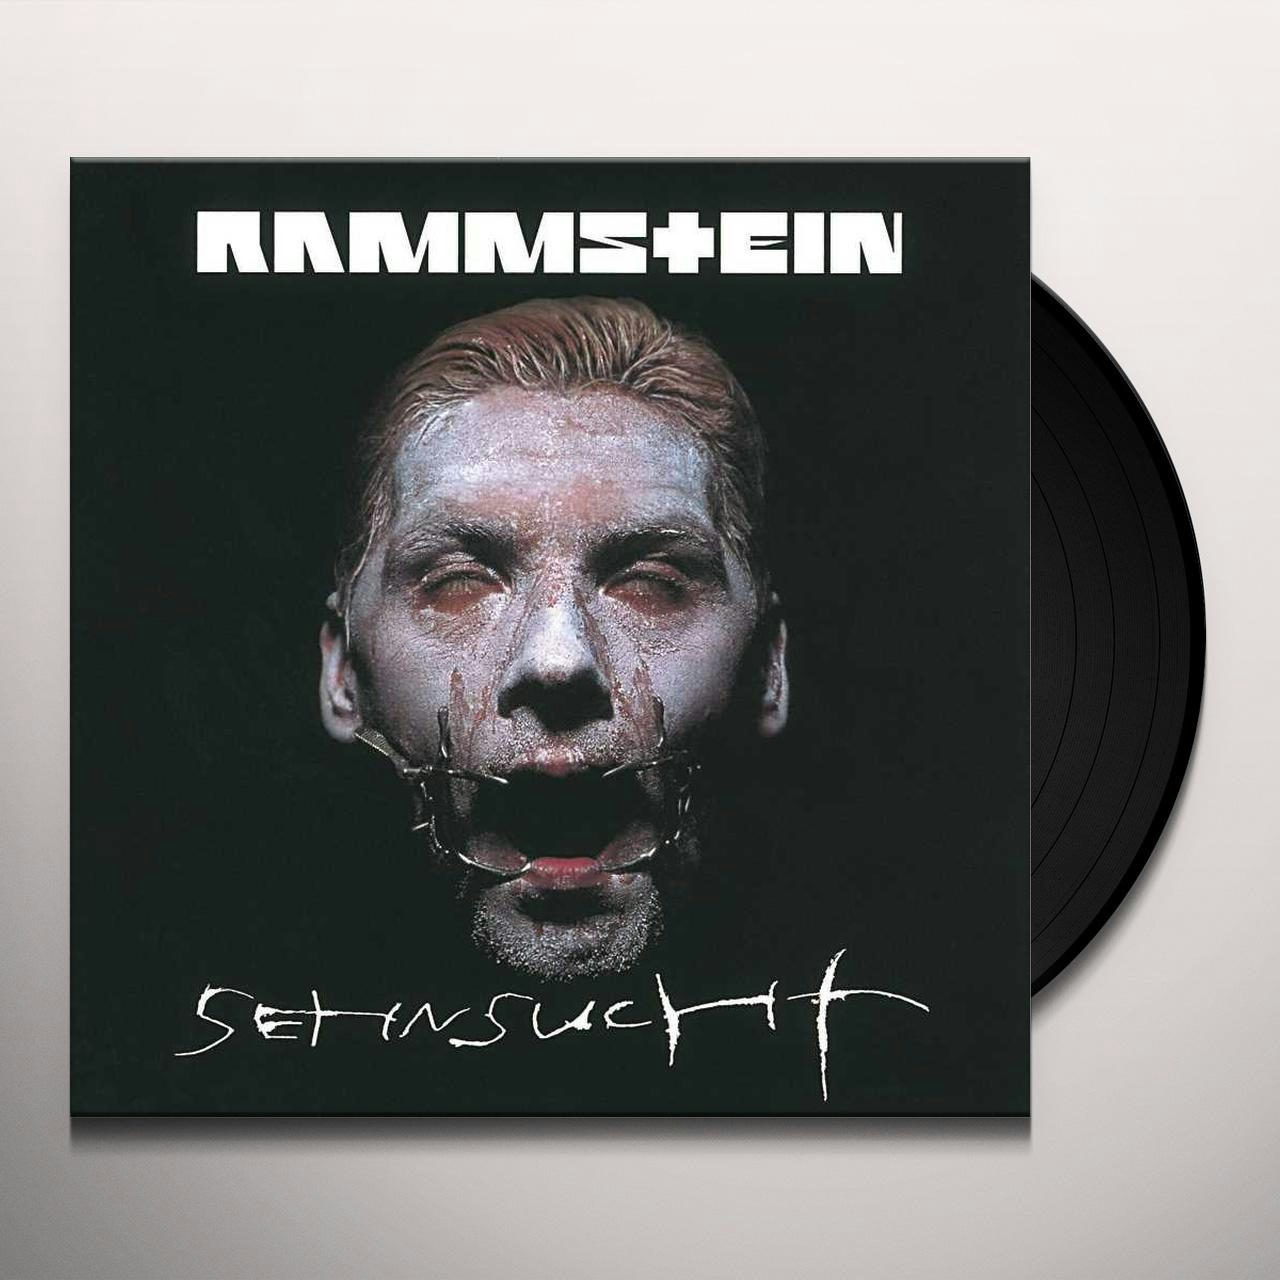 Rammstein vinyl records